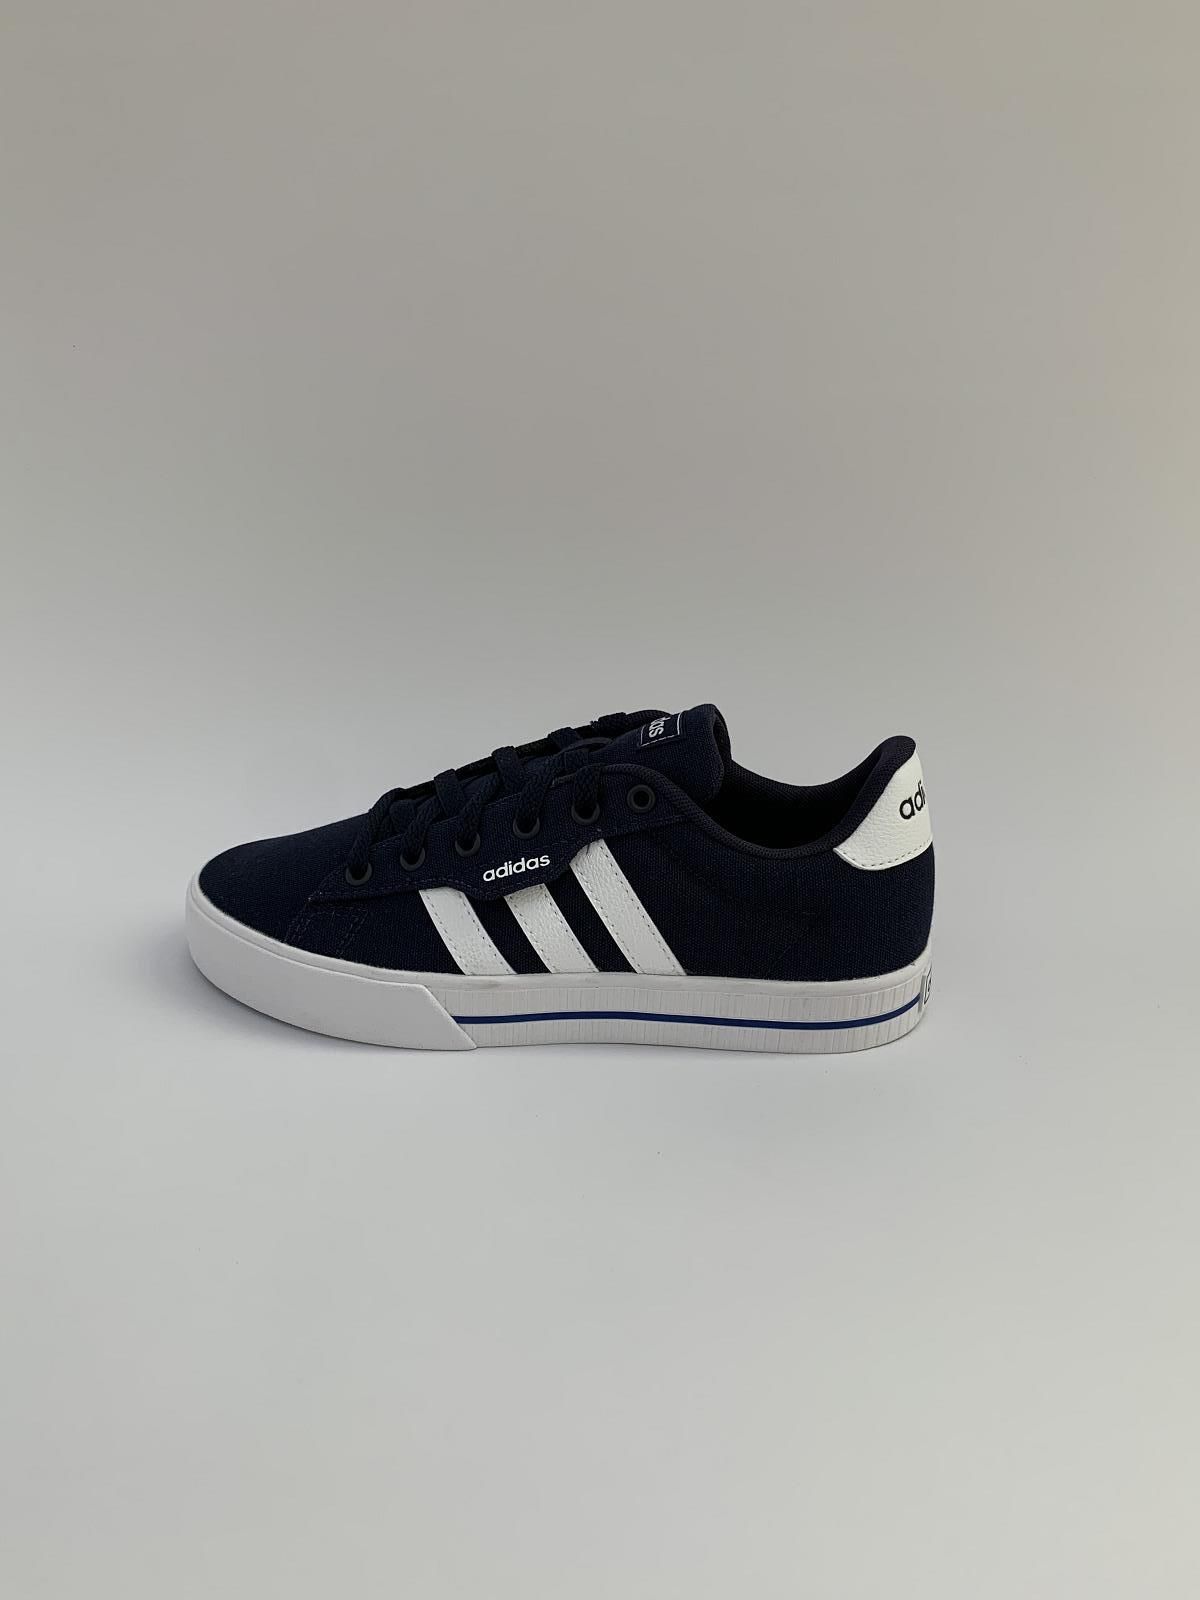 Beschikbaar bericht Avondeten Adidas Sneaker Blauw jongens (Trainer Daily Jr.Bl. - FX7268) - Schoenen Luca